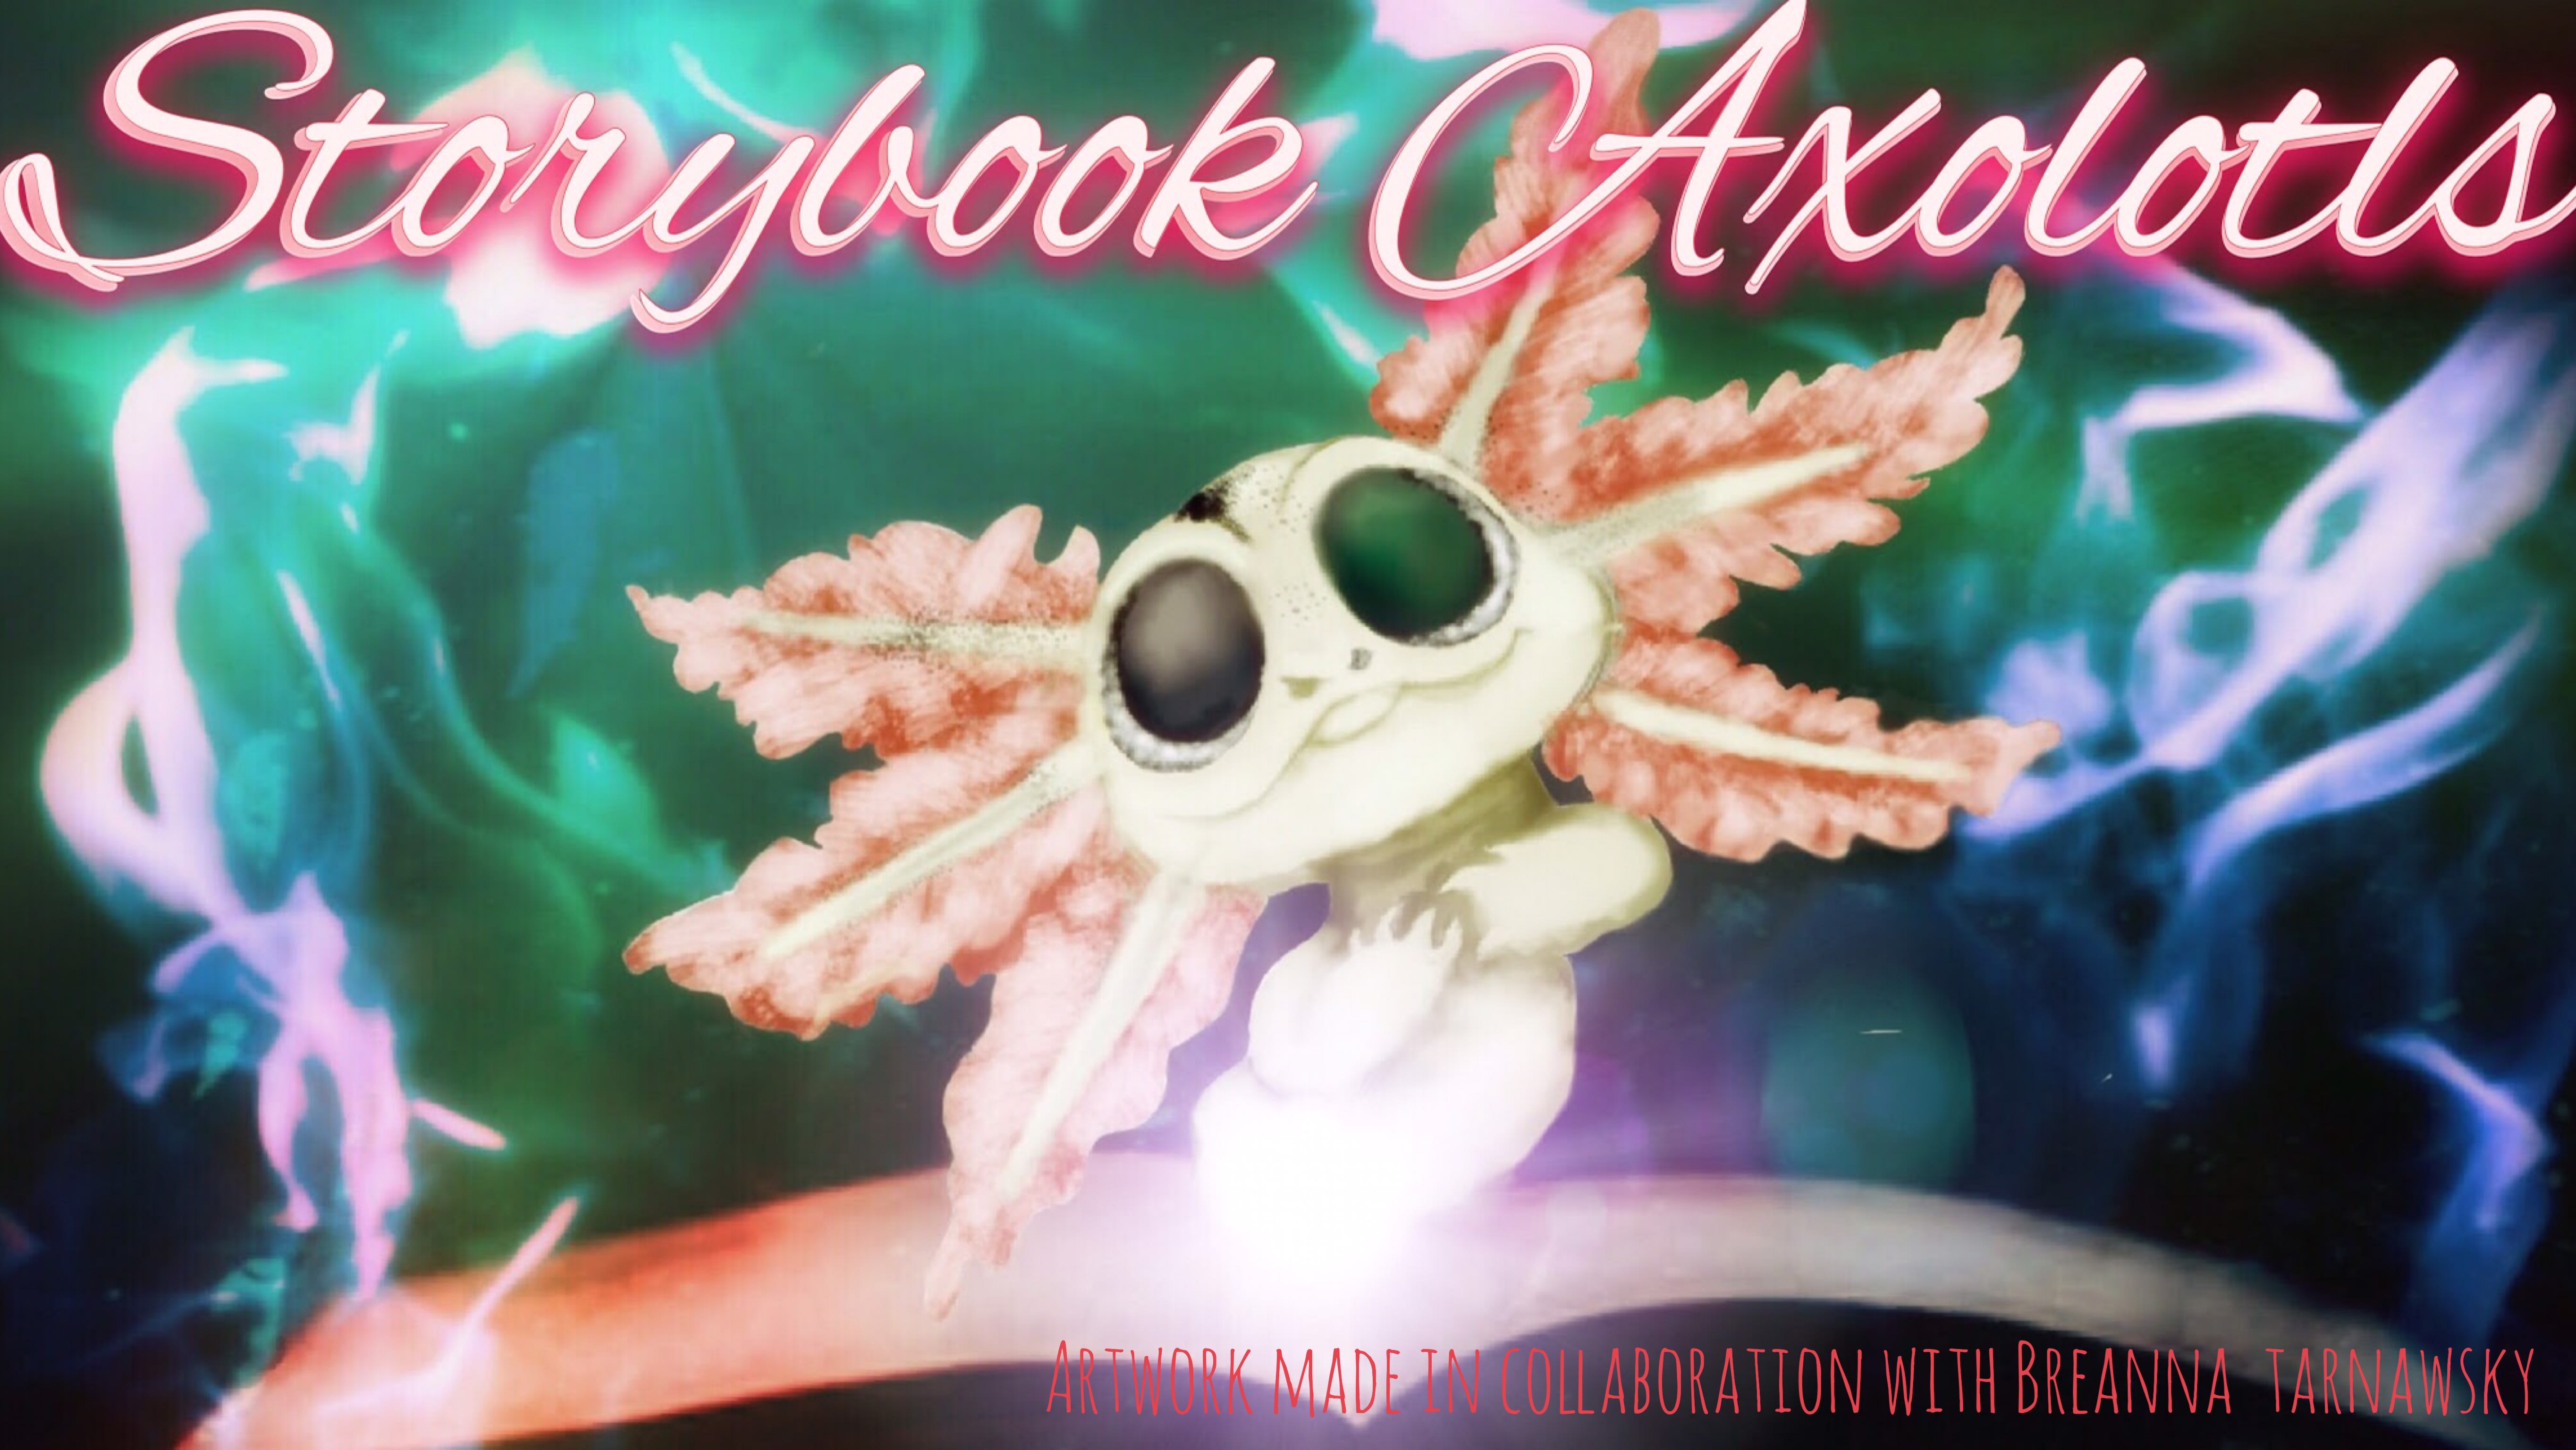 Storybook Axolotls